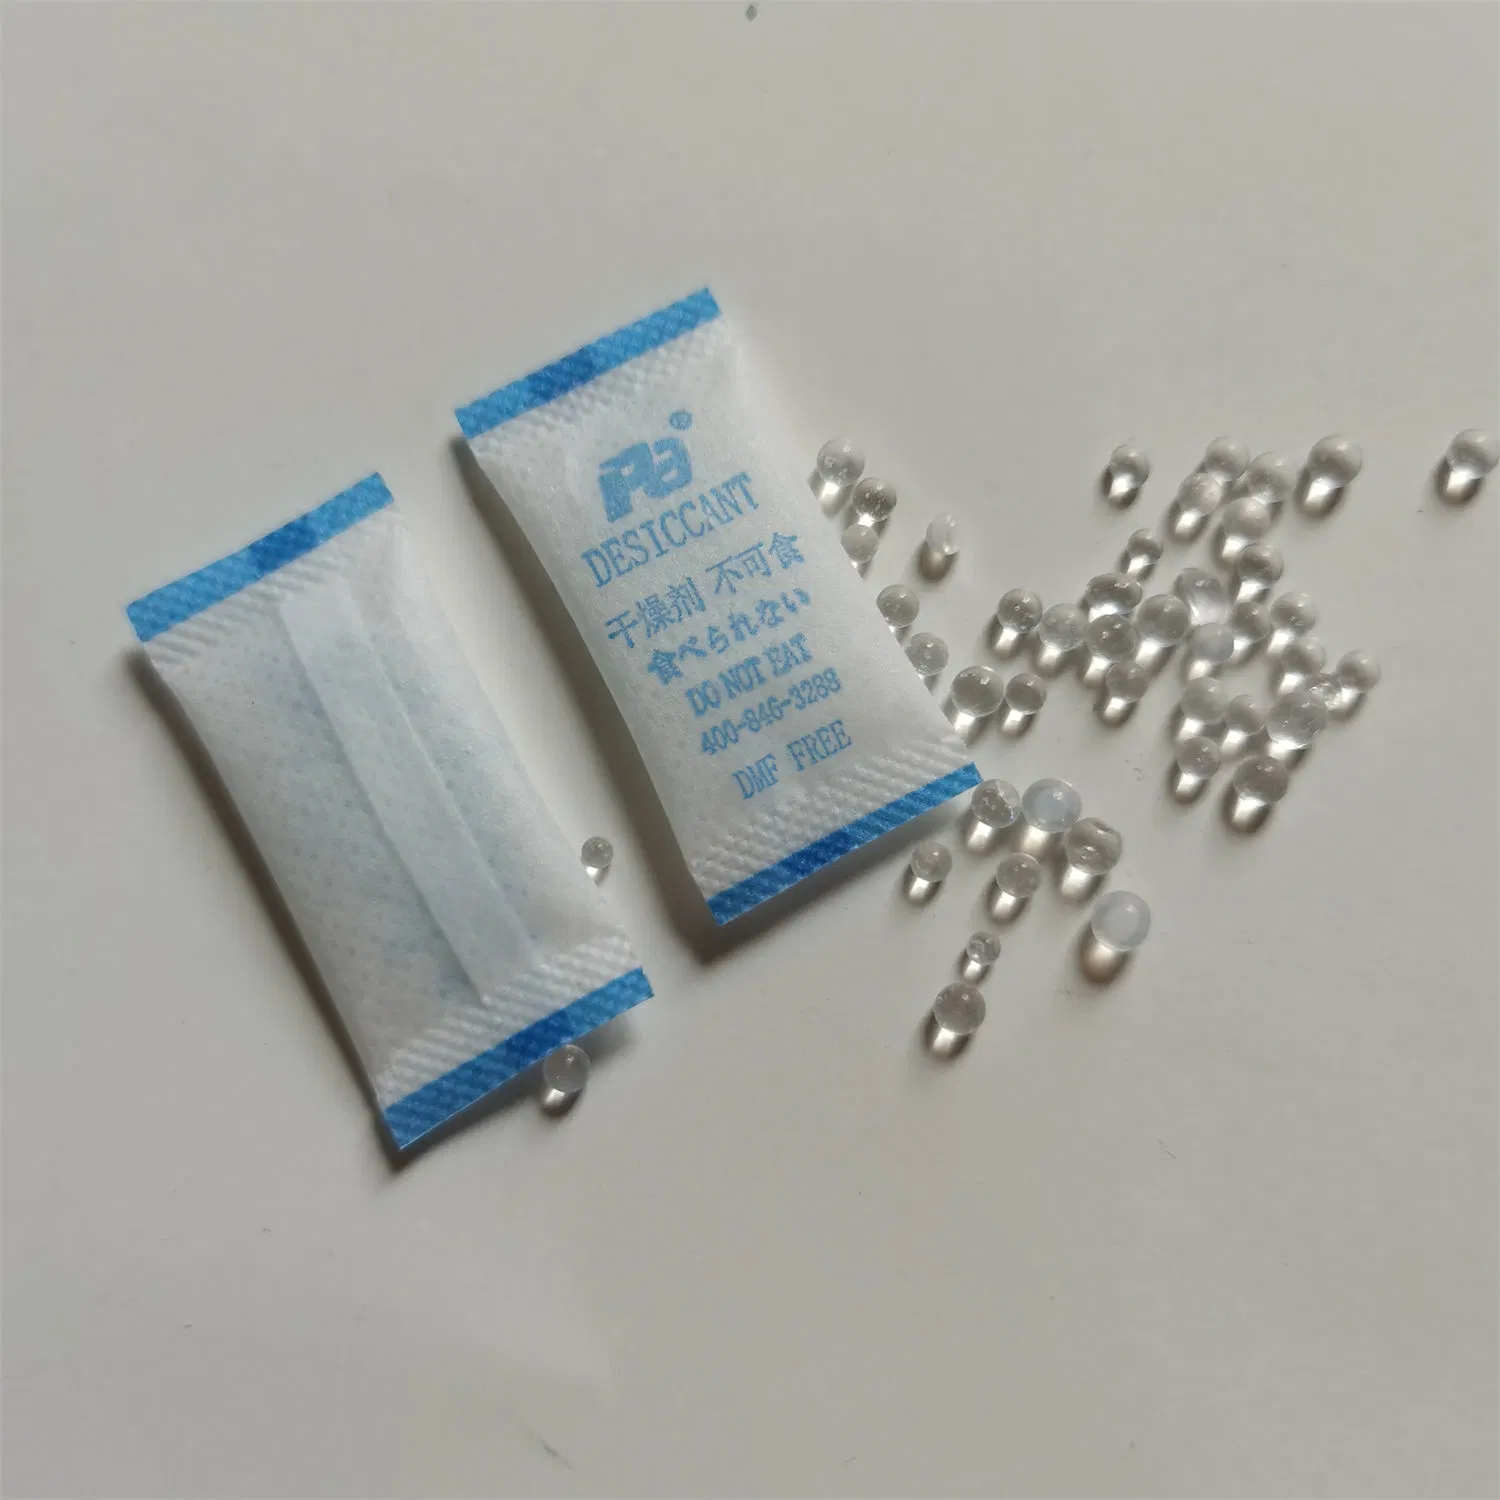 0.5g/1g White Silica Gel Desiccant in Tyvek for Rapid Test/Pregnancy Kits Storage